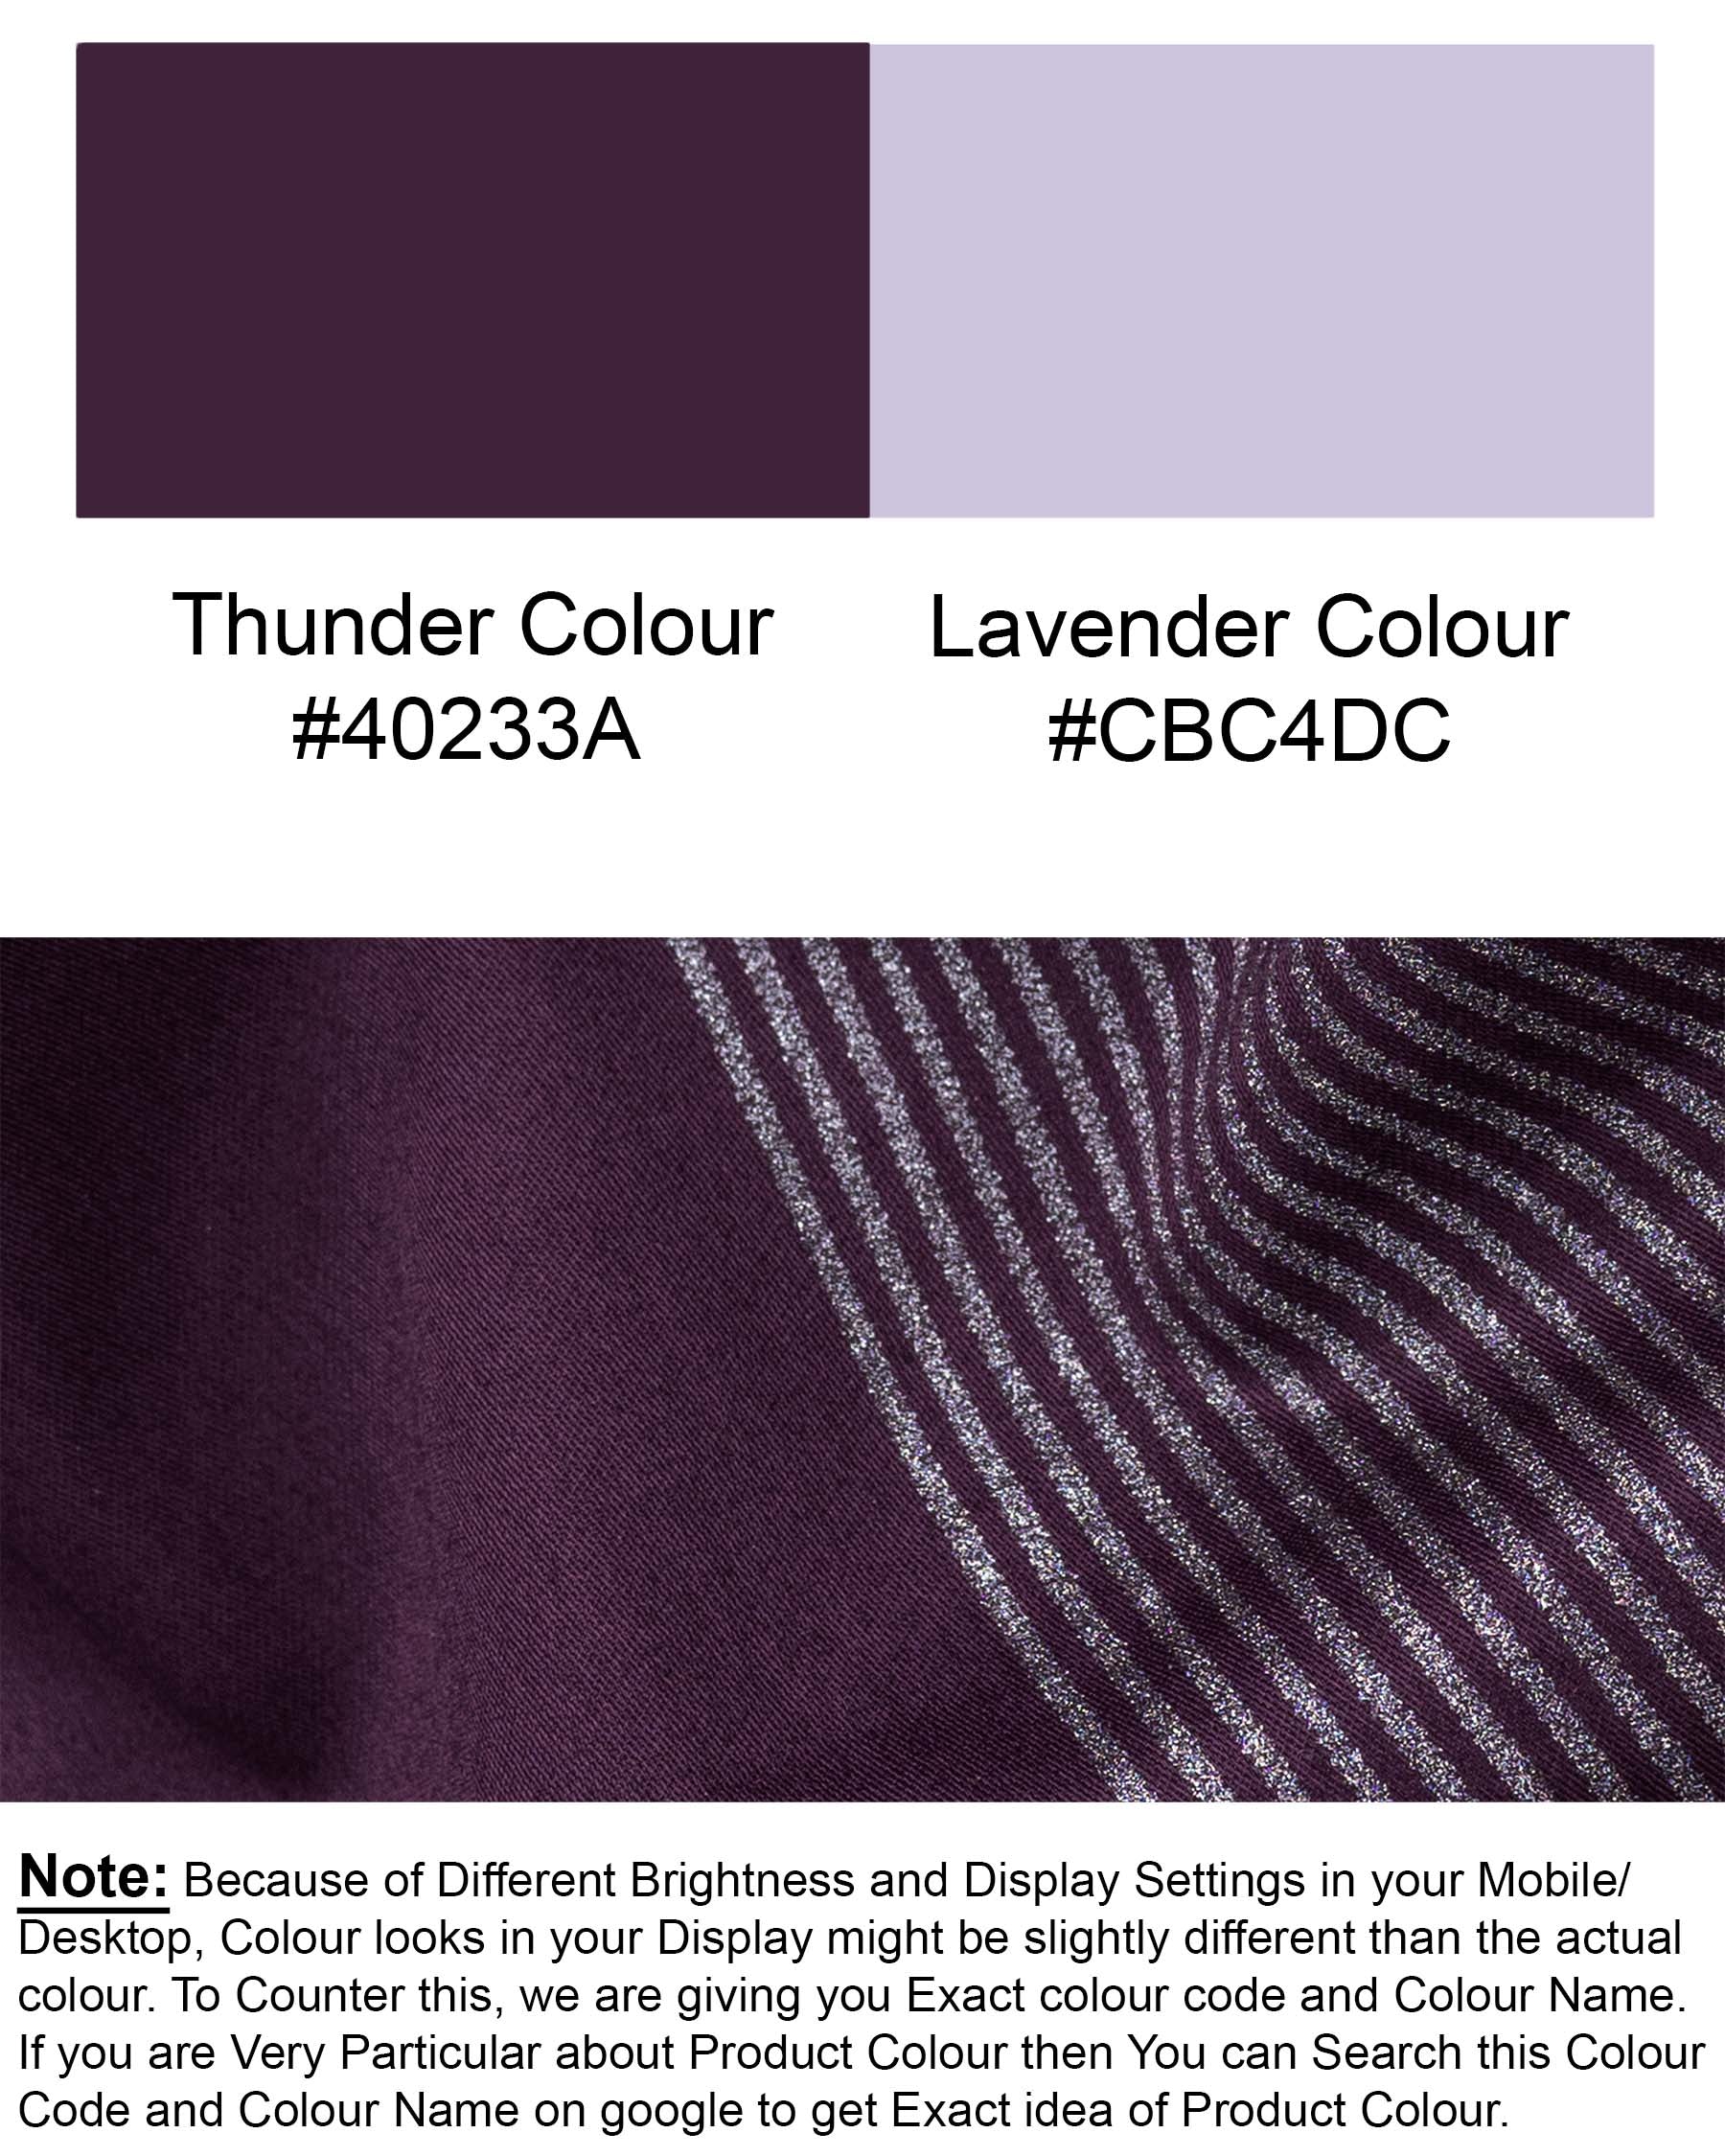 Half Thunder Purple Half Striped Premium Cotton Shirt 6877-BD-38, 6877-BD-H-38, 6877-BD-39, 6877-BD-H-39, 6877-BD-40, 6877-BD-H-40, 6877-BD-42, 6877-BD-H-42, 6877-BD-44, 6877-BD-H-44, 6877-BD-46, 6877-BD-H-46, 6877-BD-48, 6877-BD-H-48, 6877-BD-50, 6877-BD-H-50, 6877-BD-52, 6877-BD-H-52